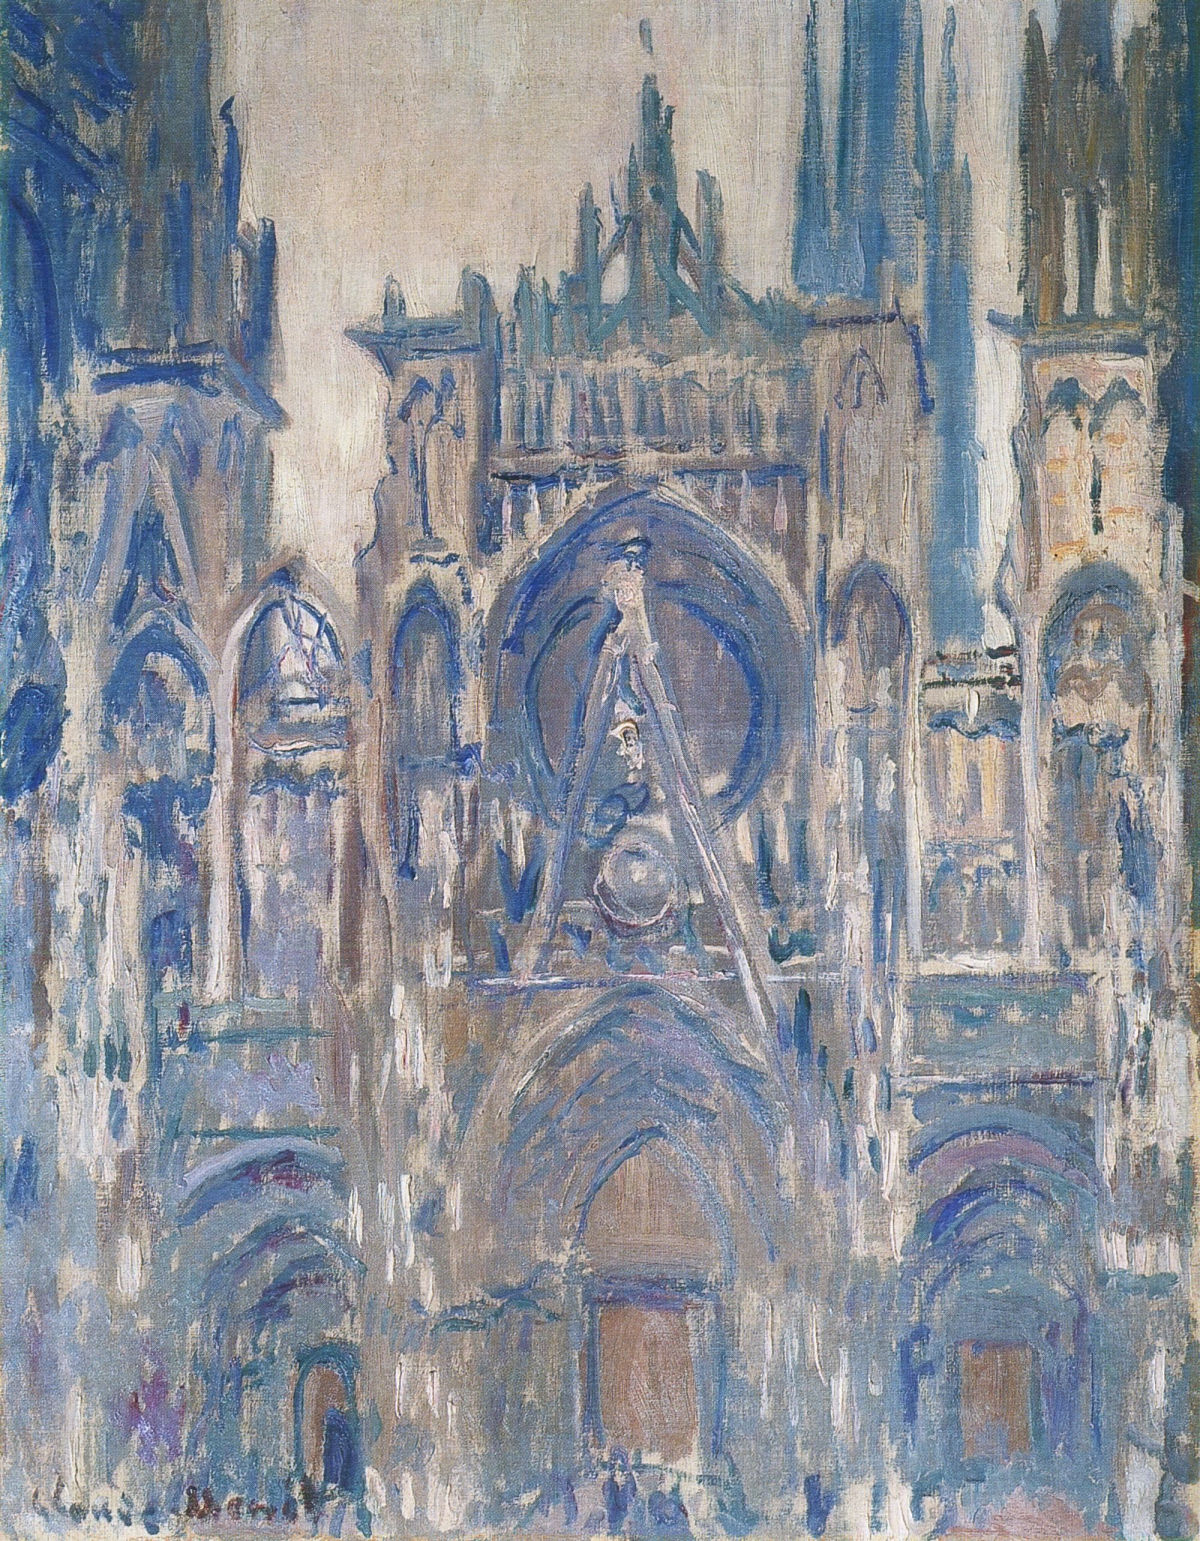 Claude+Monet-1840-1926 (622).jpg